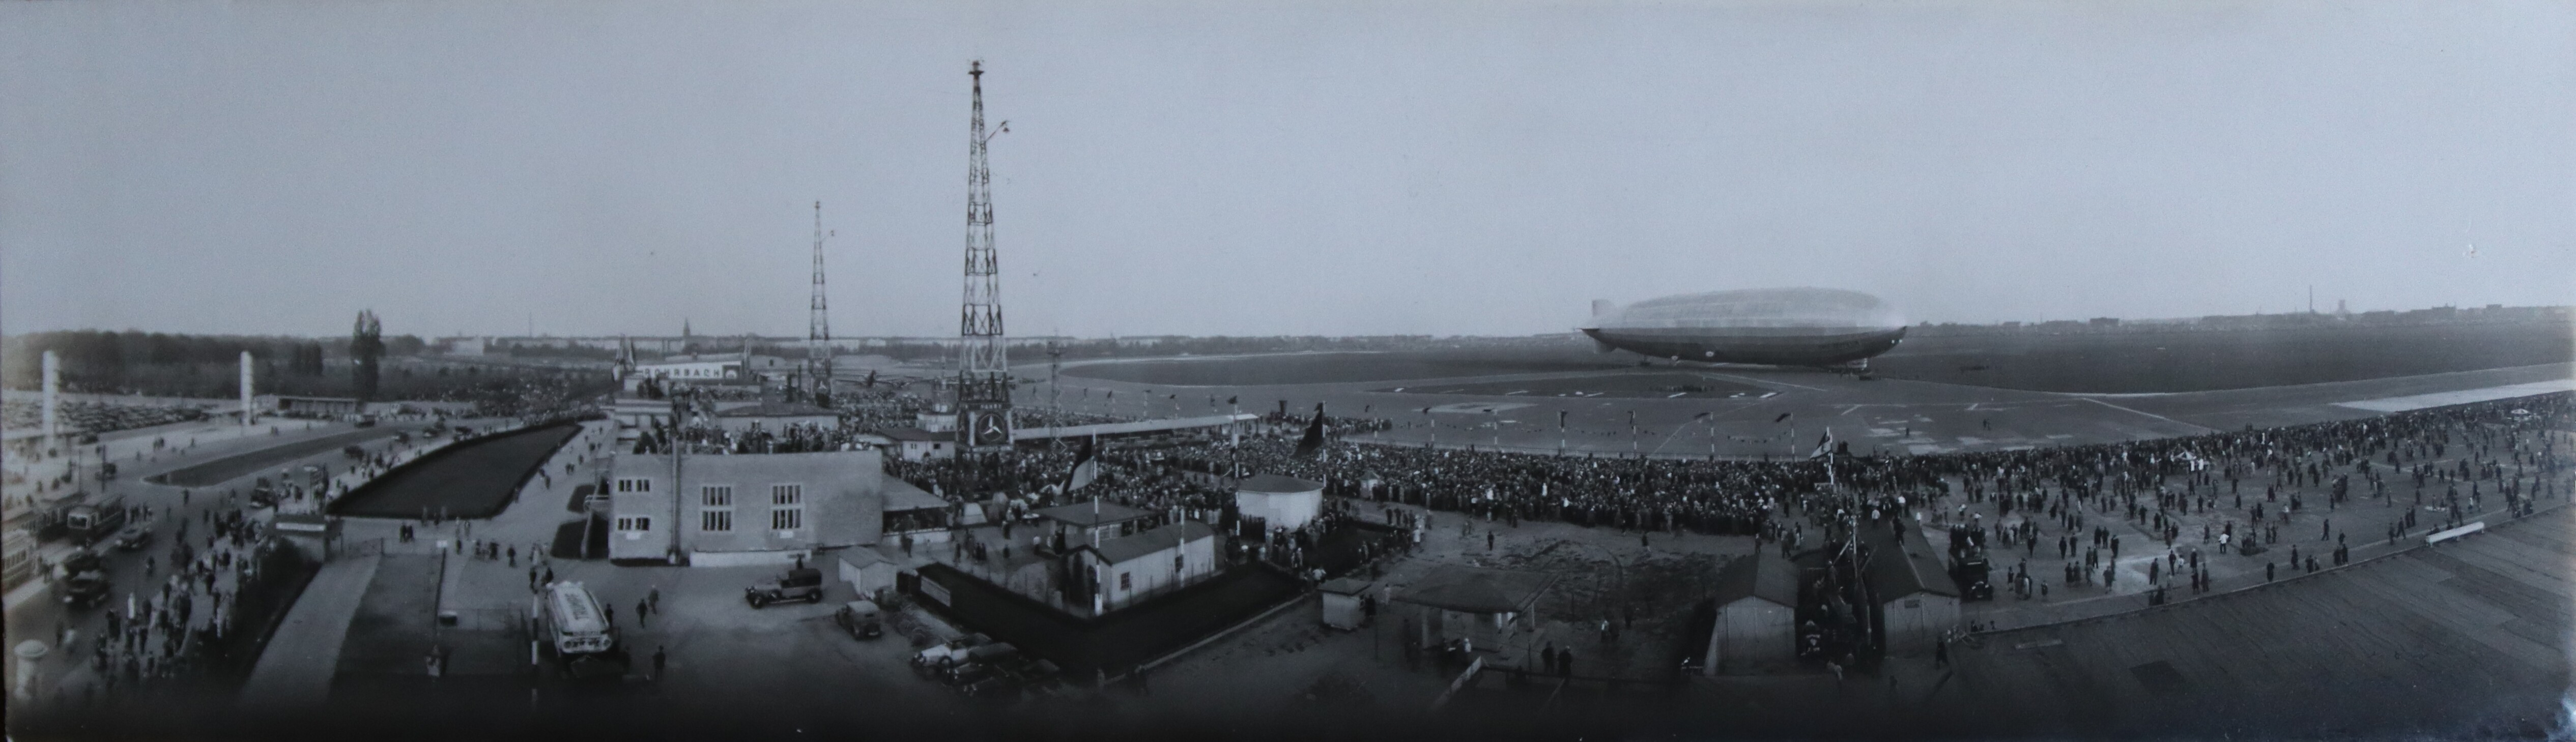 Panoramafoto: Berliner Zeppelin-Tagen vom 22.-24. Juni 1930 (Moritz-Adolf Trappe CC BY-NC-SA)